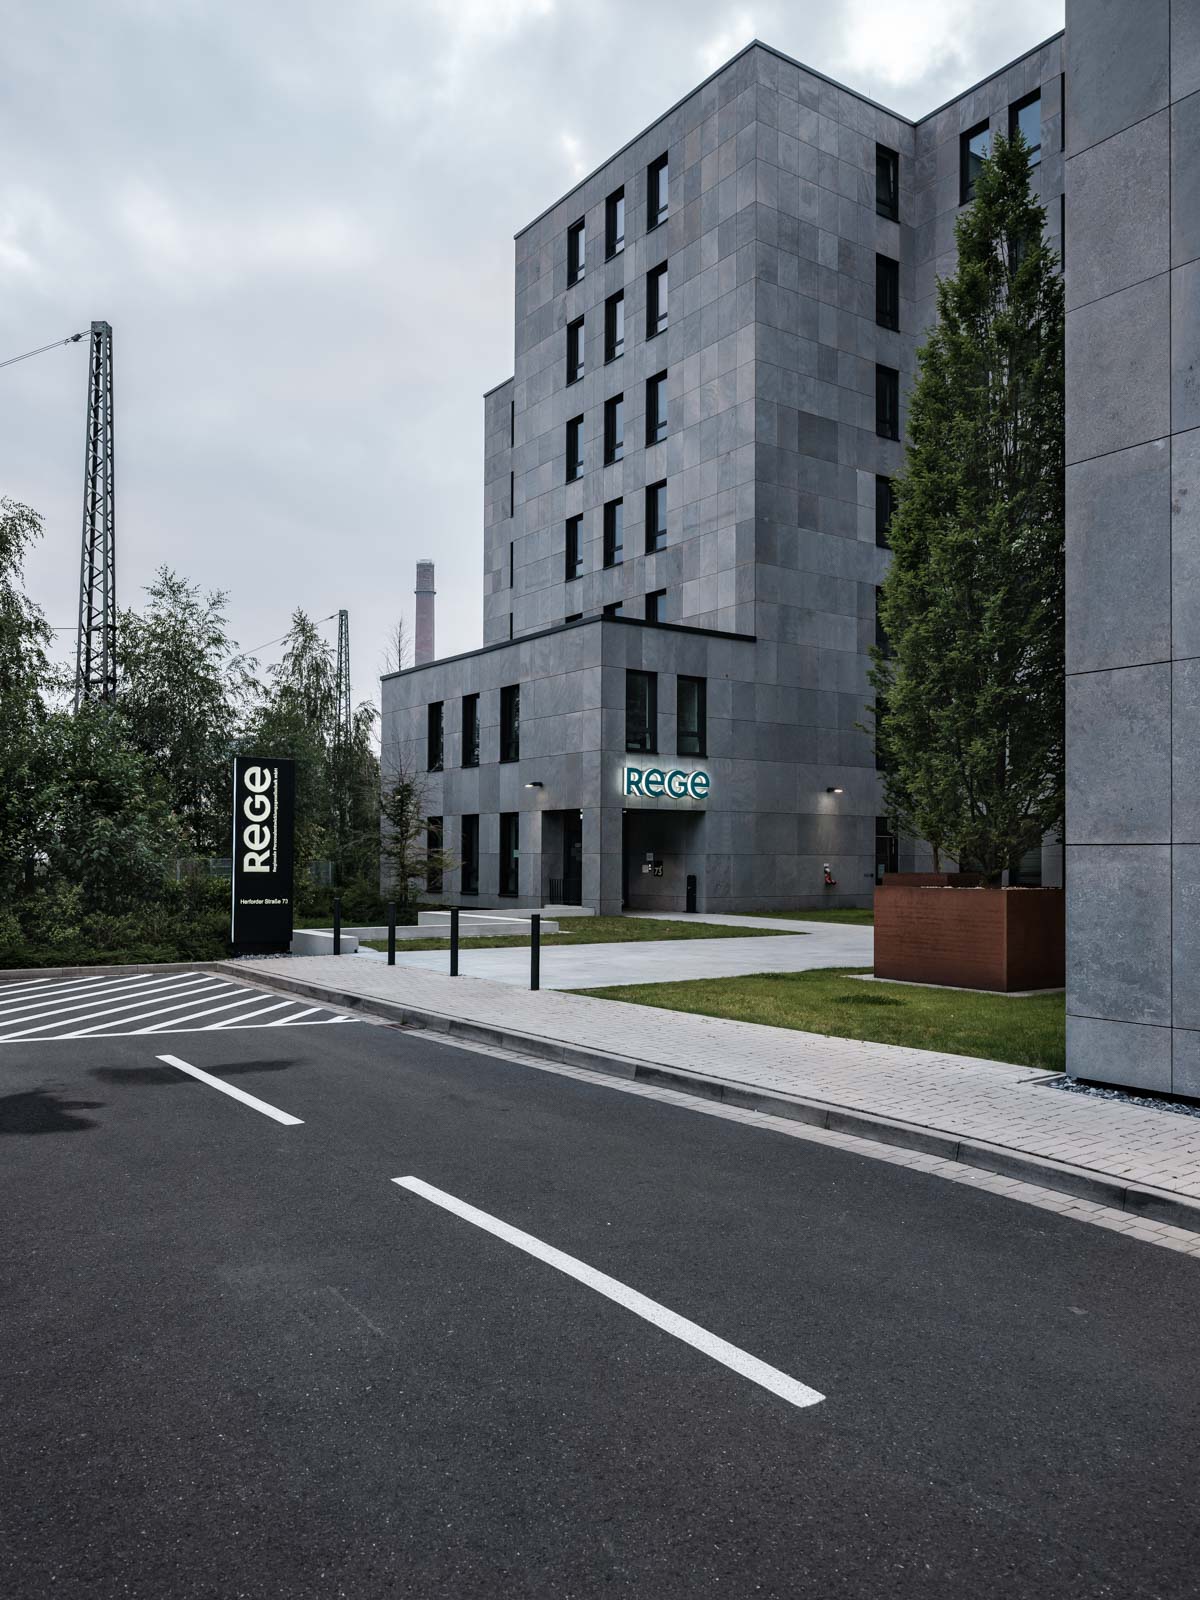 Office buildung of the REGE at 'Herforder Straße' in July 2020 (Bielefeld, Germany).